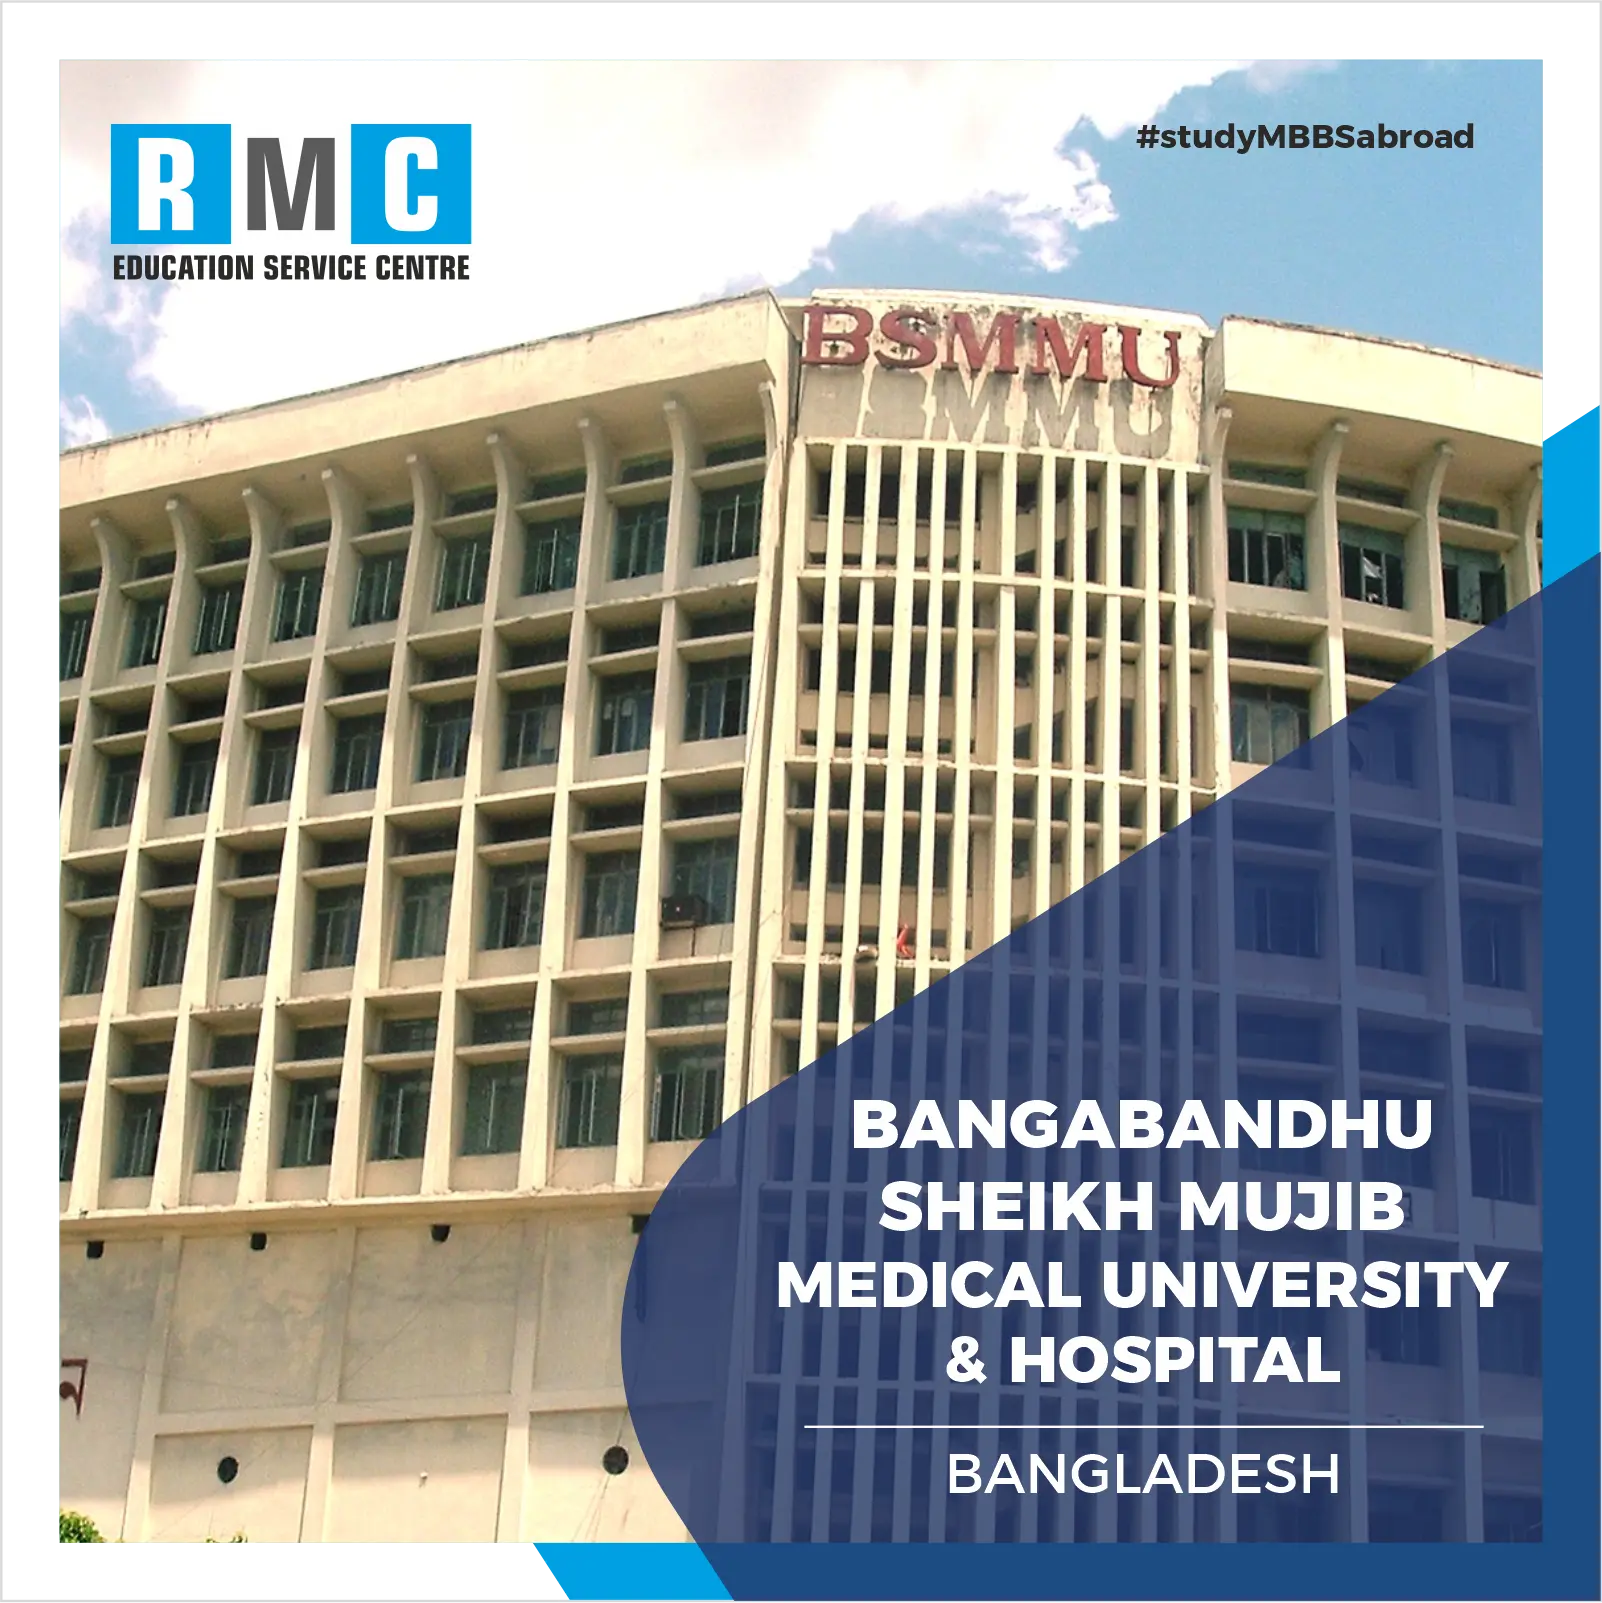 Bangabandhu Sheikh Mujib Medical University & Hospital